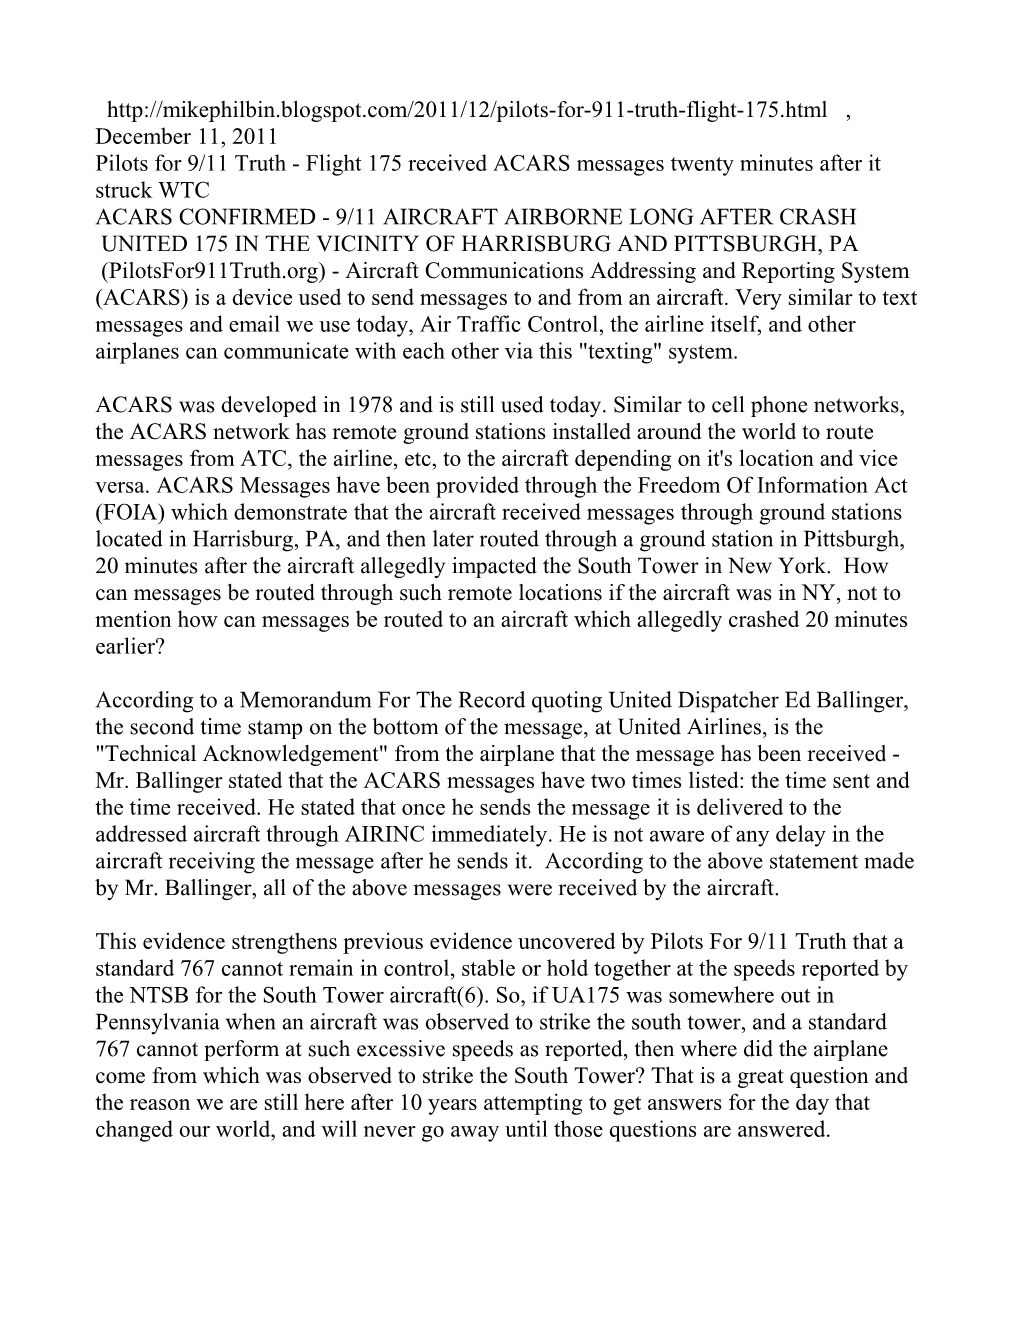 December 11, 2011 Pilots for 9/11 Truth - Flight 175 Received ACARS Messages Twenty